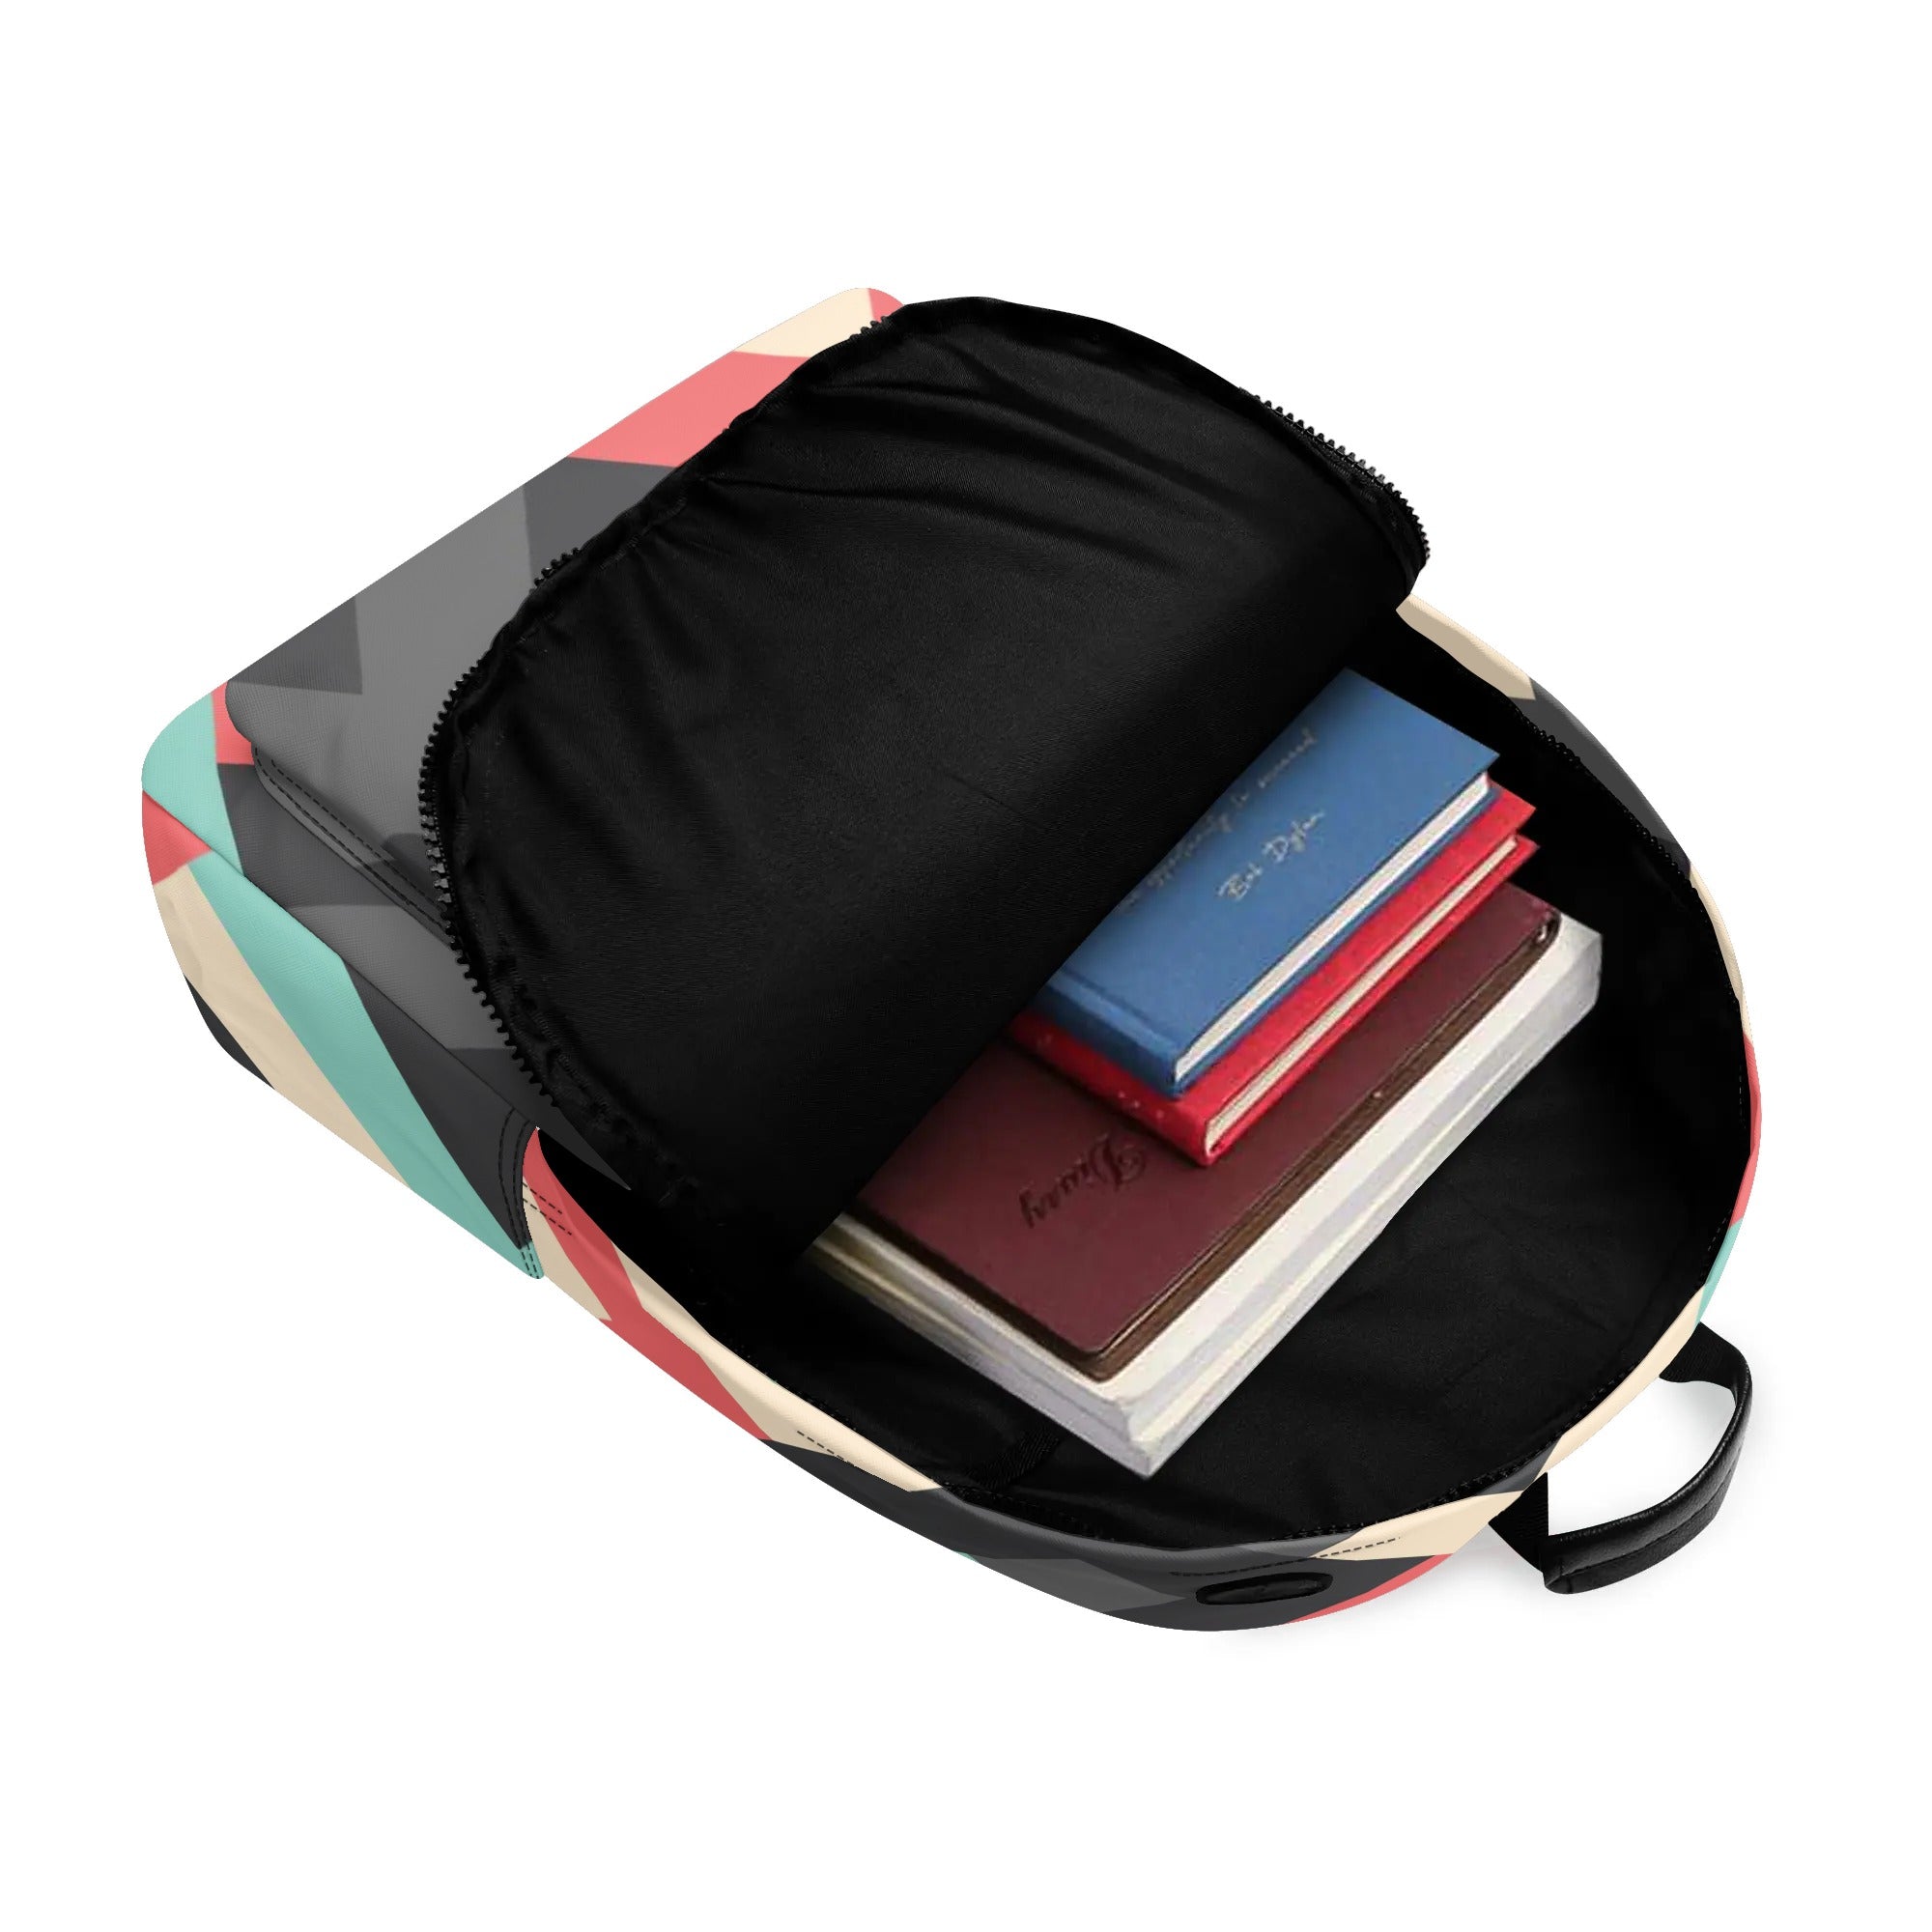 SORTYGO - Digital Deco Backpack in